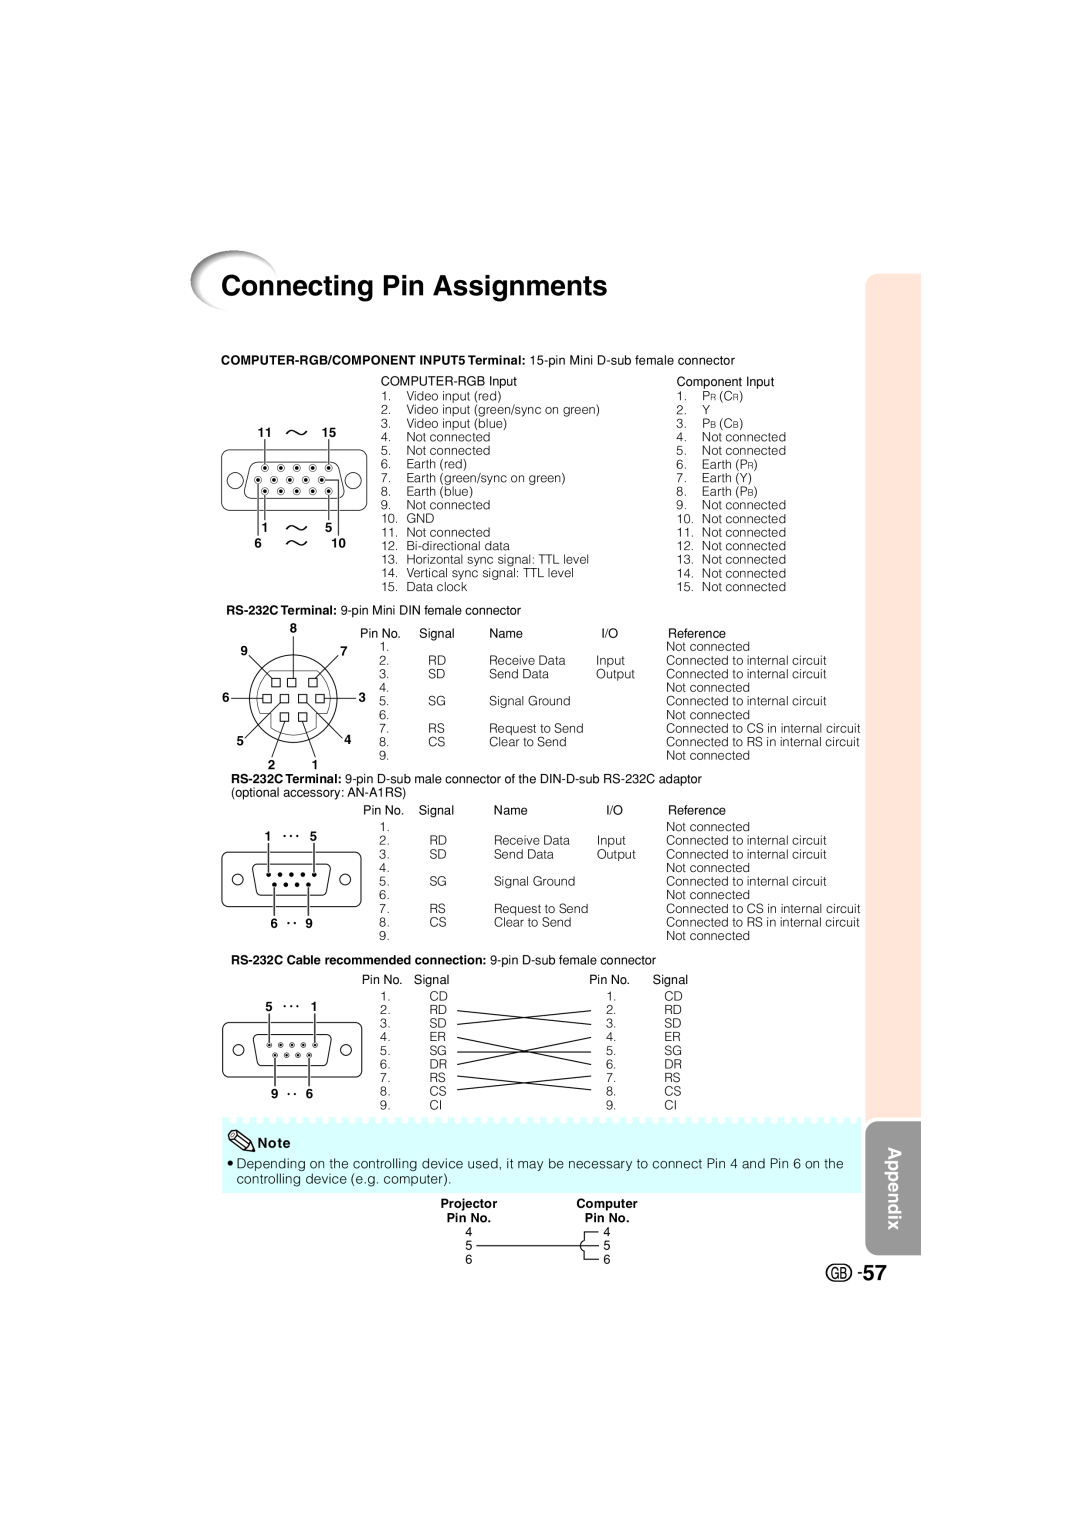 Sharp XV-Z3000 manual Connecting Pin Assignments, Appendix, Projector, Computer, Pin No 